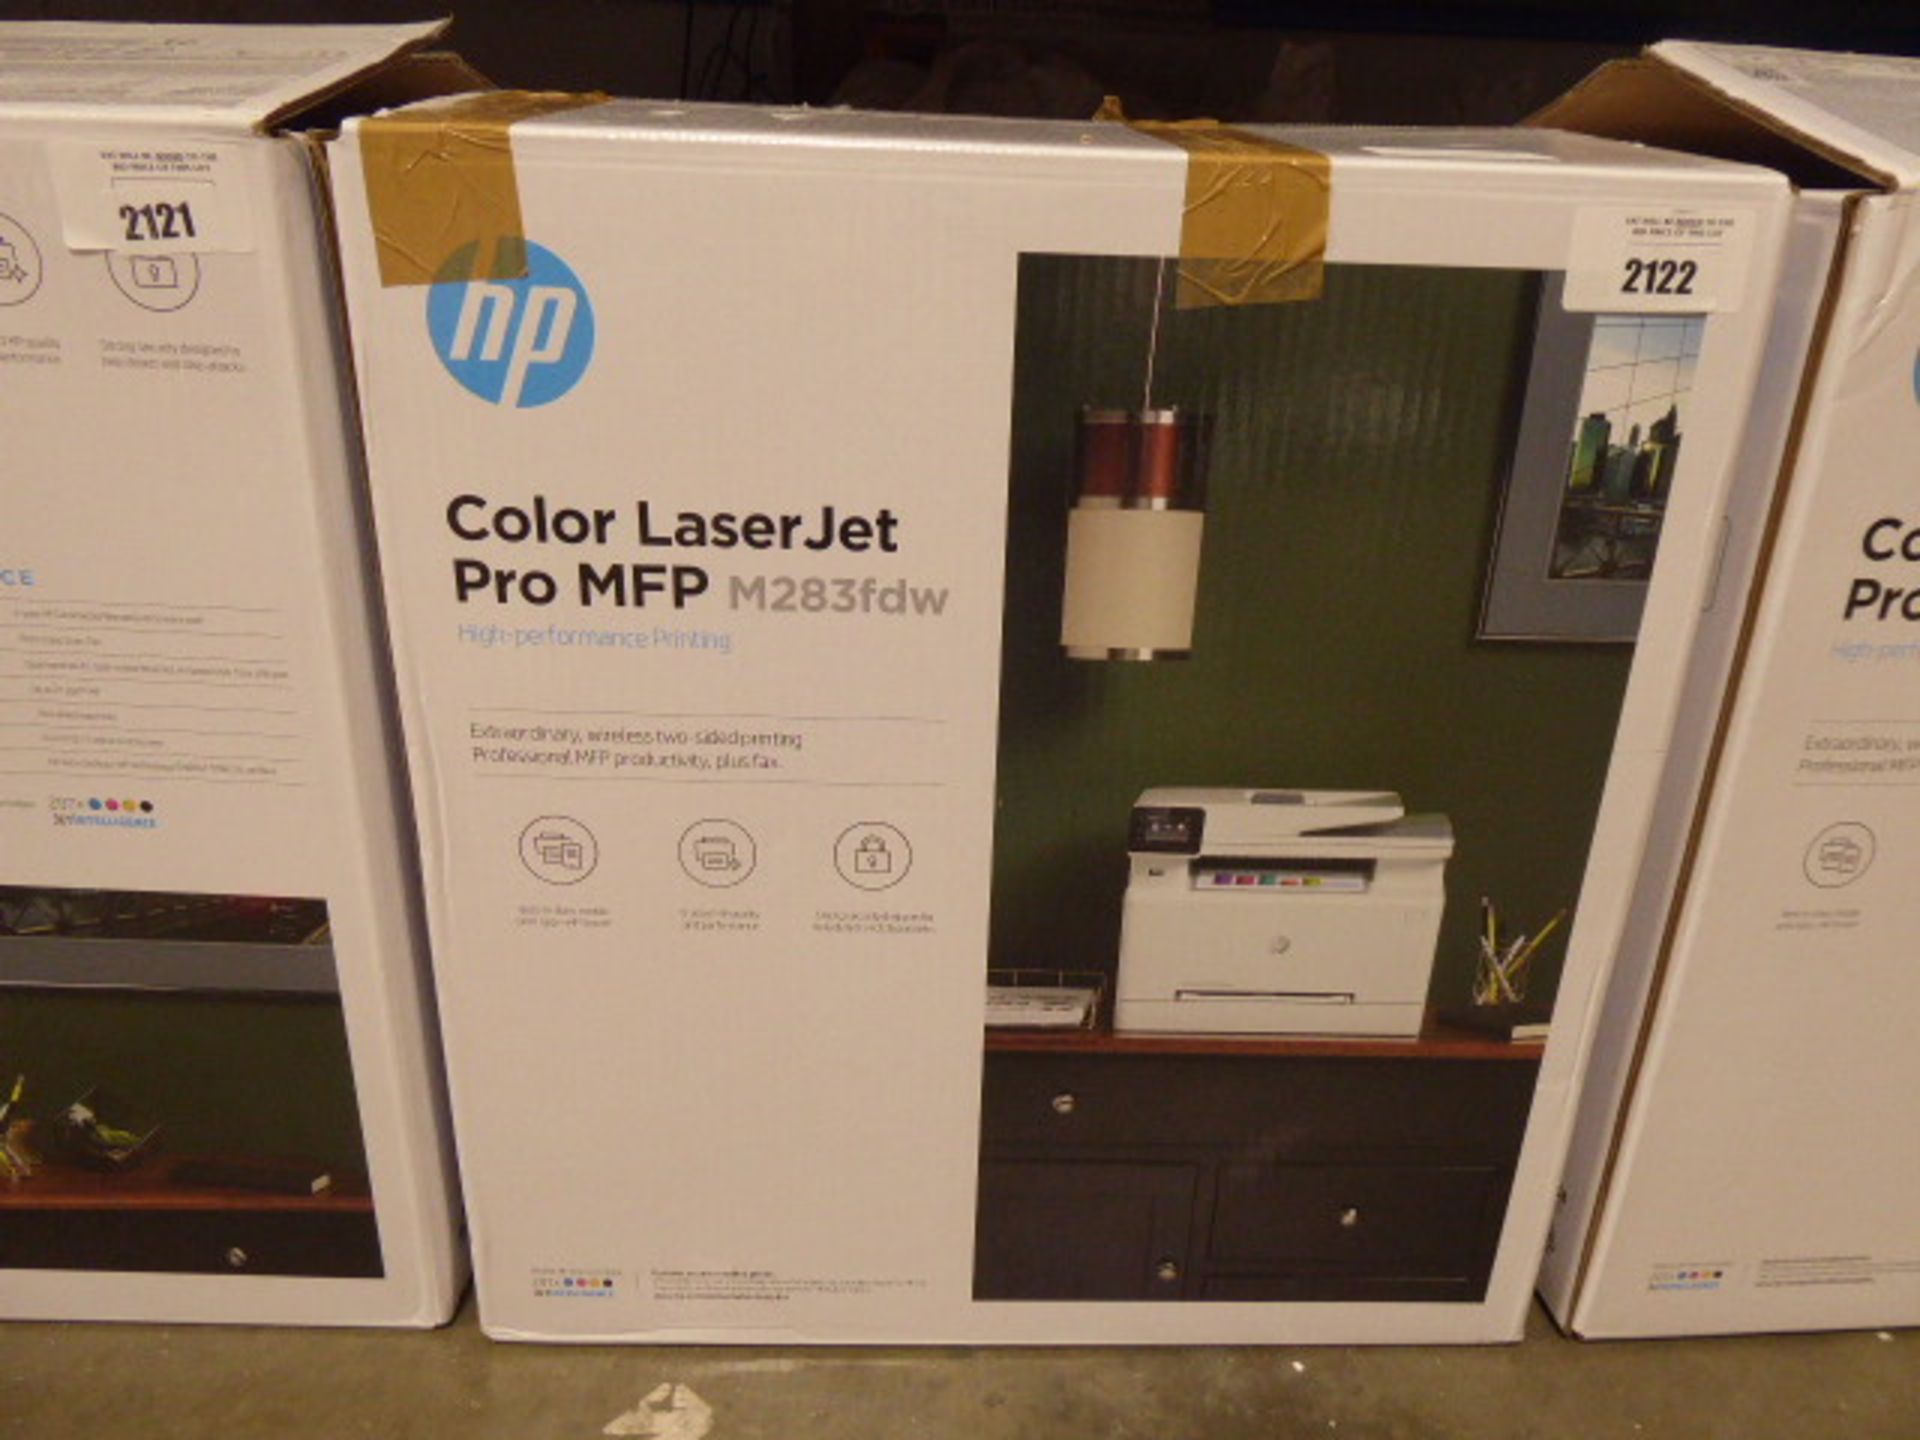 HP Colour LaserJet Pro MFP-M283FDW laserjet printer in box